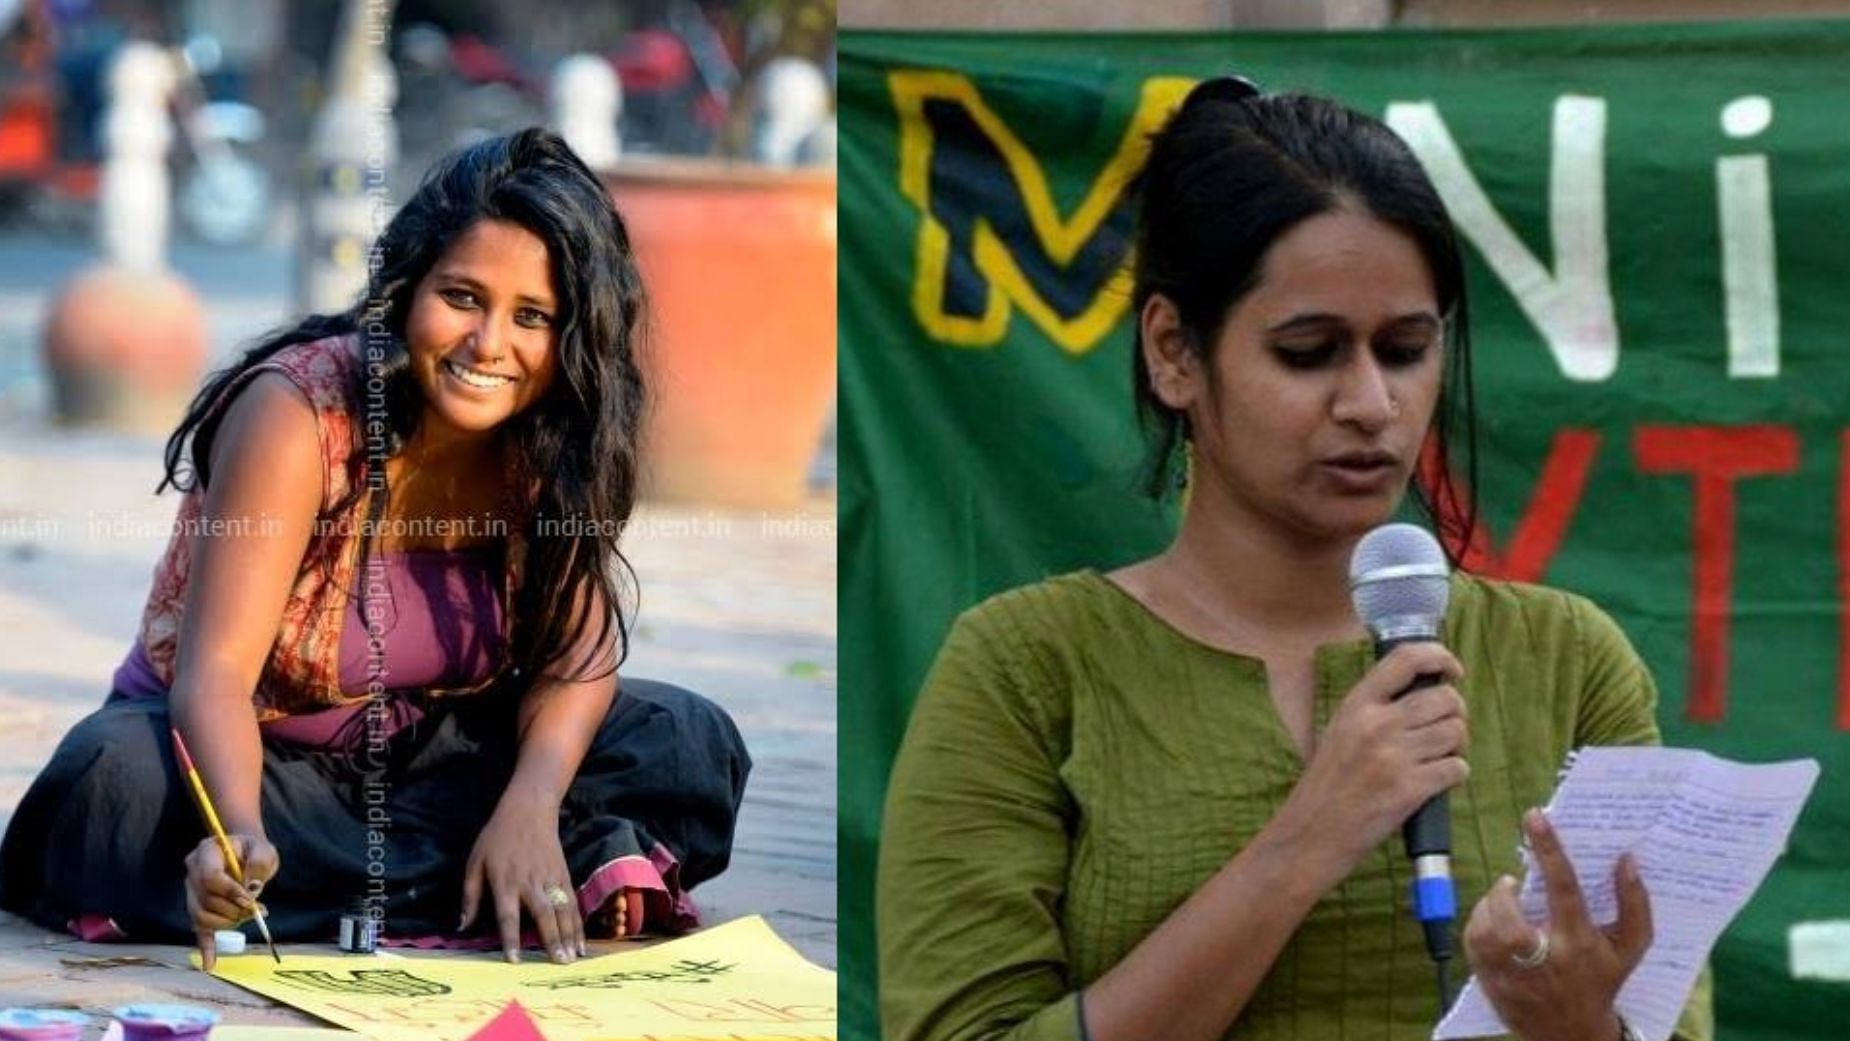 The two activists – Devangana Kalita (30) and Natasha Narwal (32) – are students of Jawaharlal Nehru University.